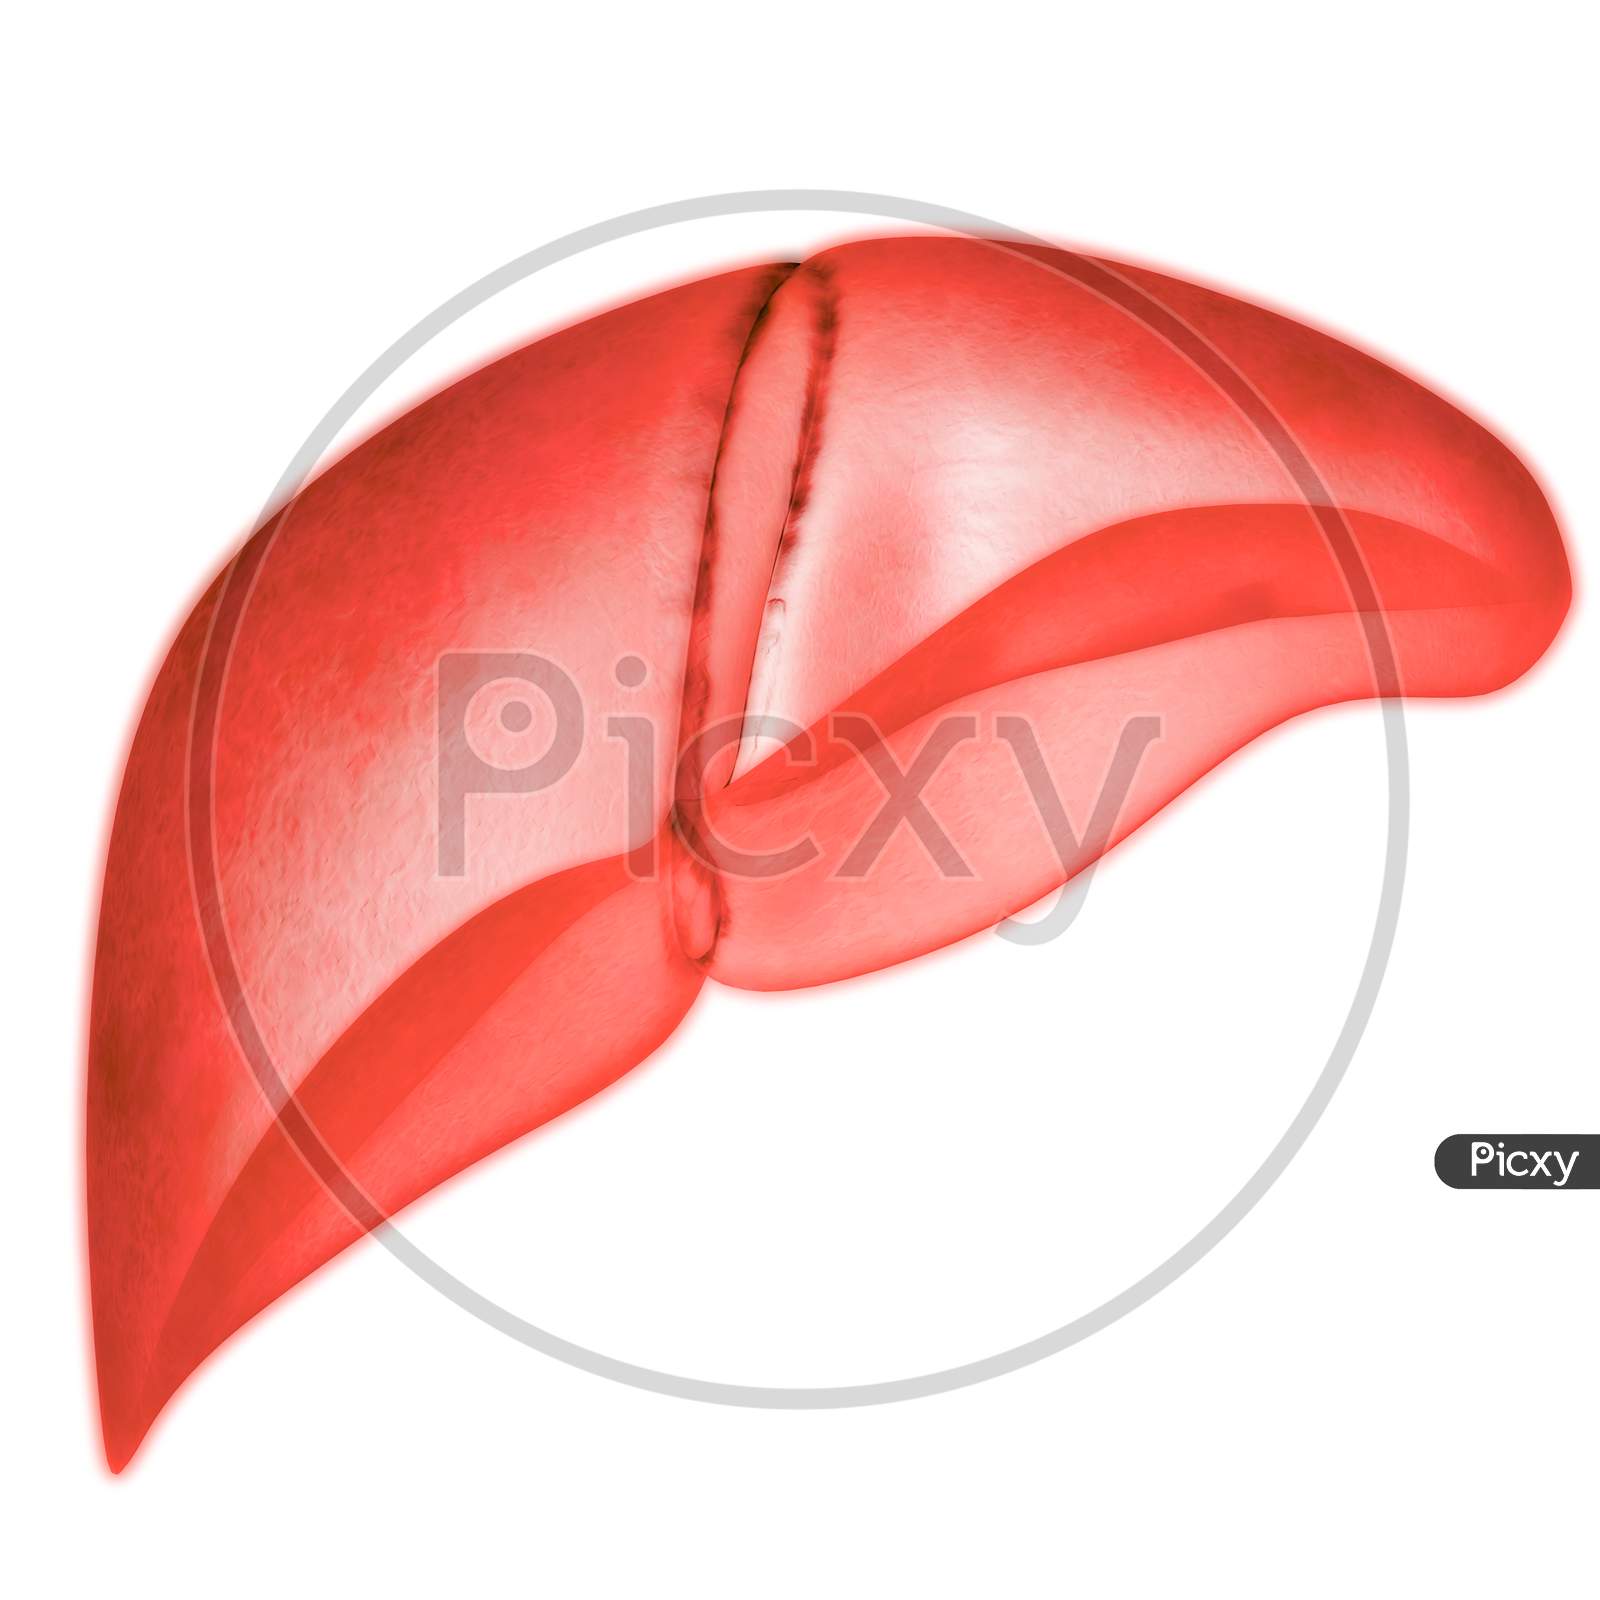 Human Internal Digestive Organ Liver Anatomy